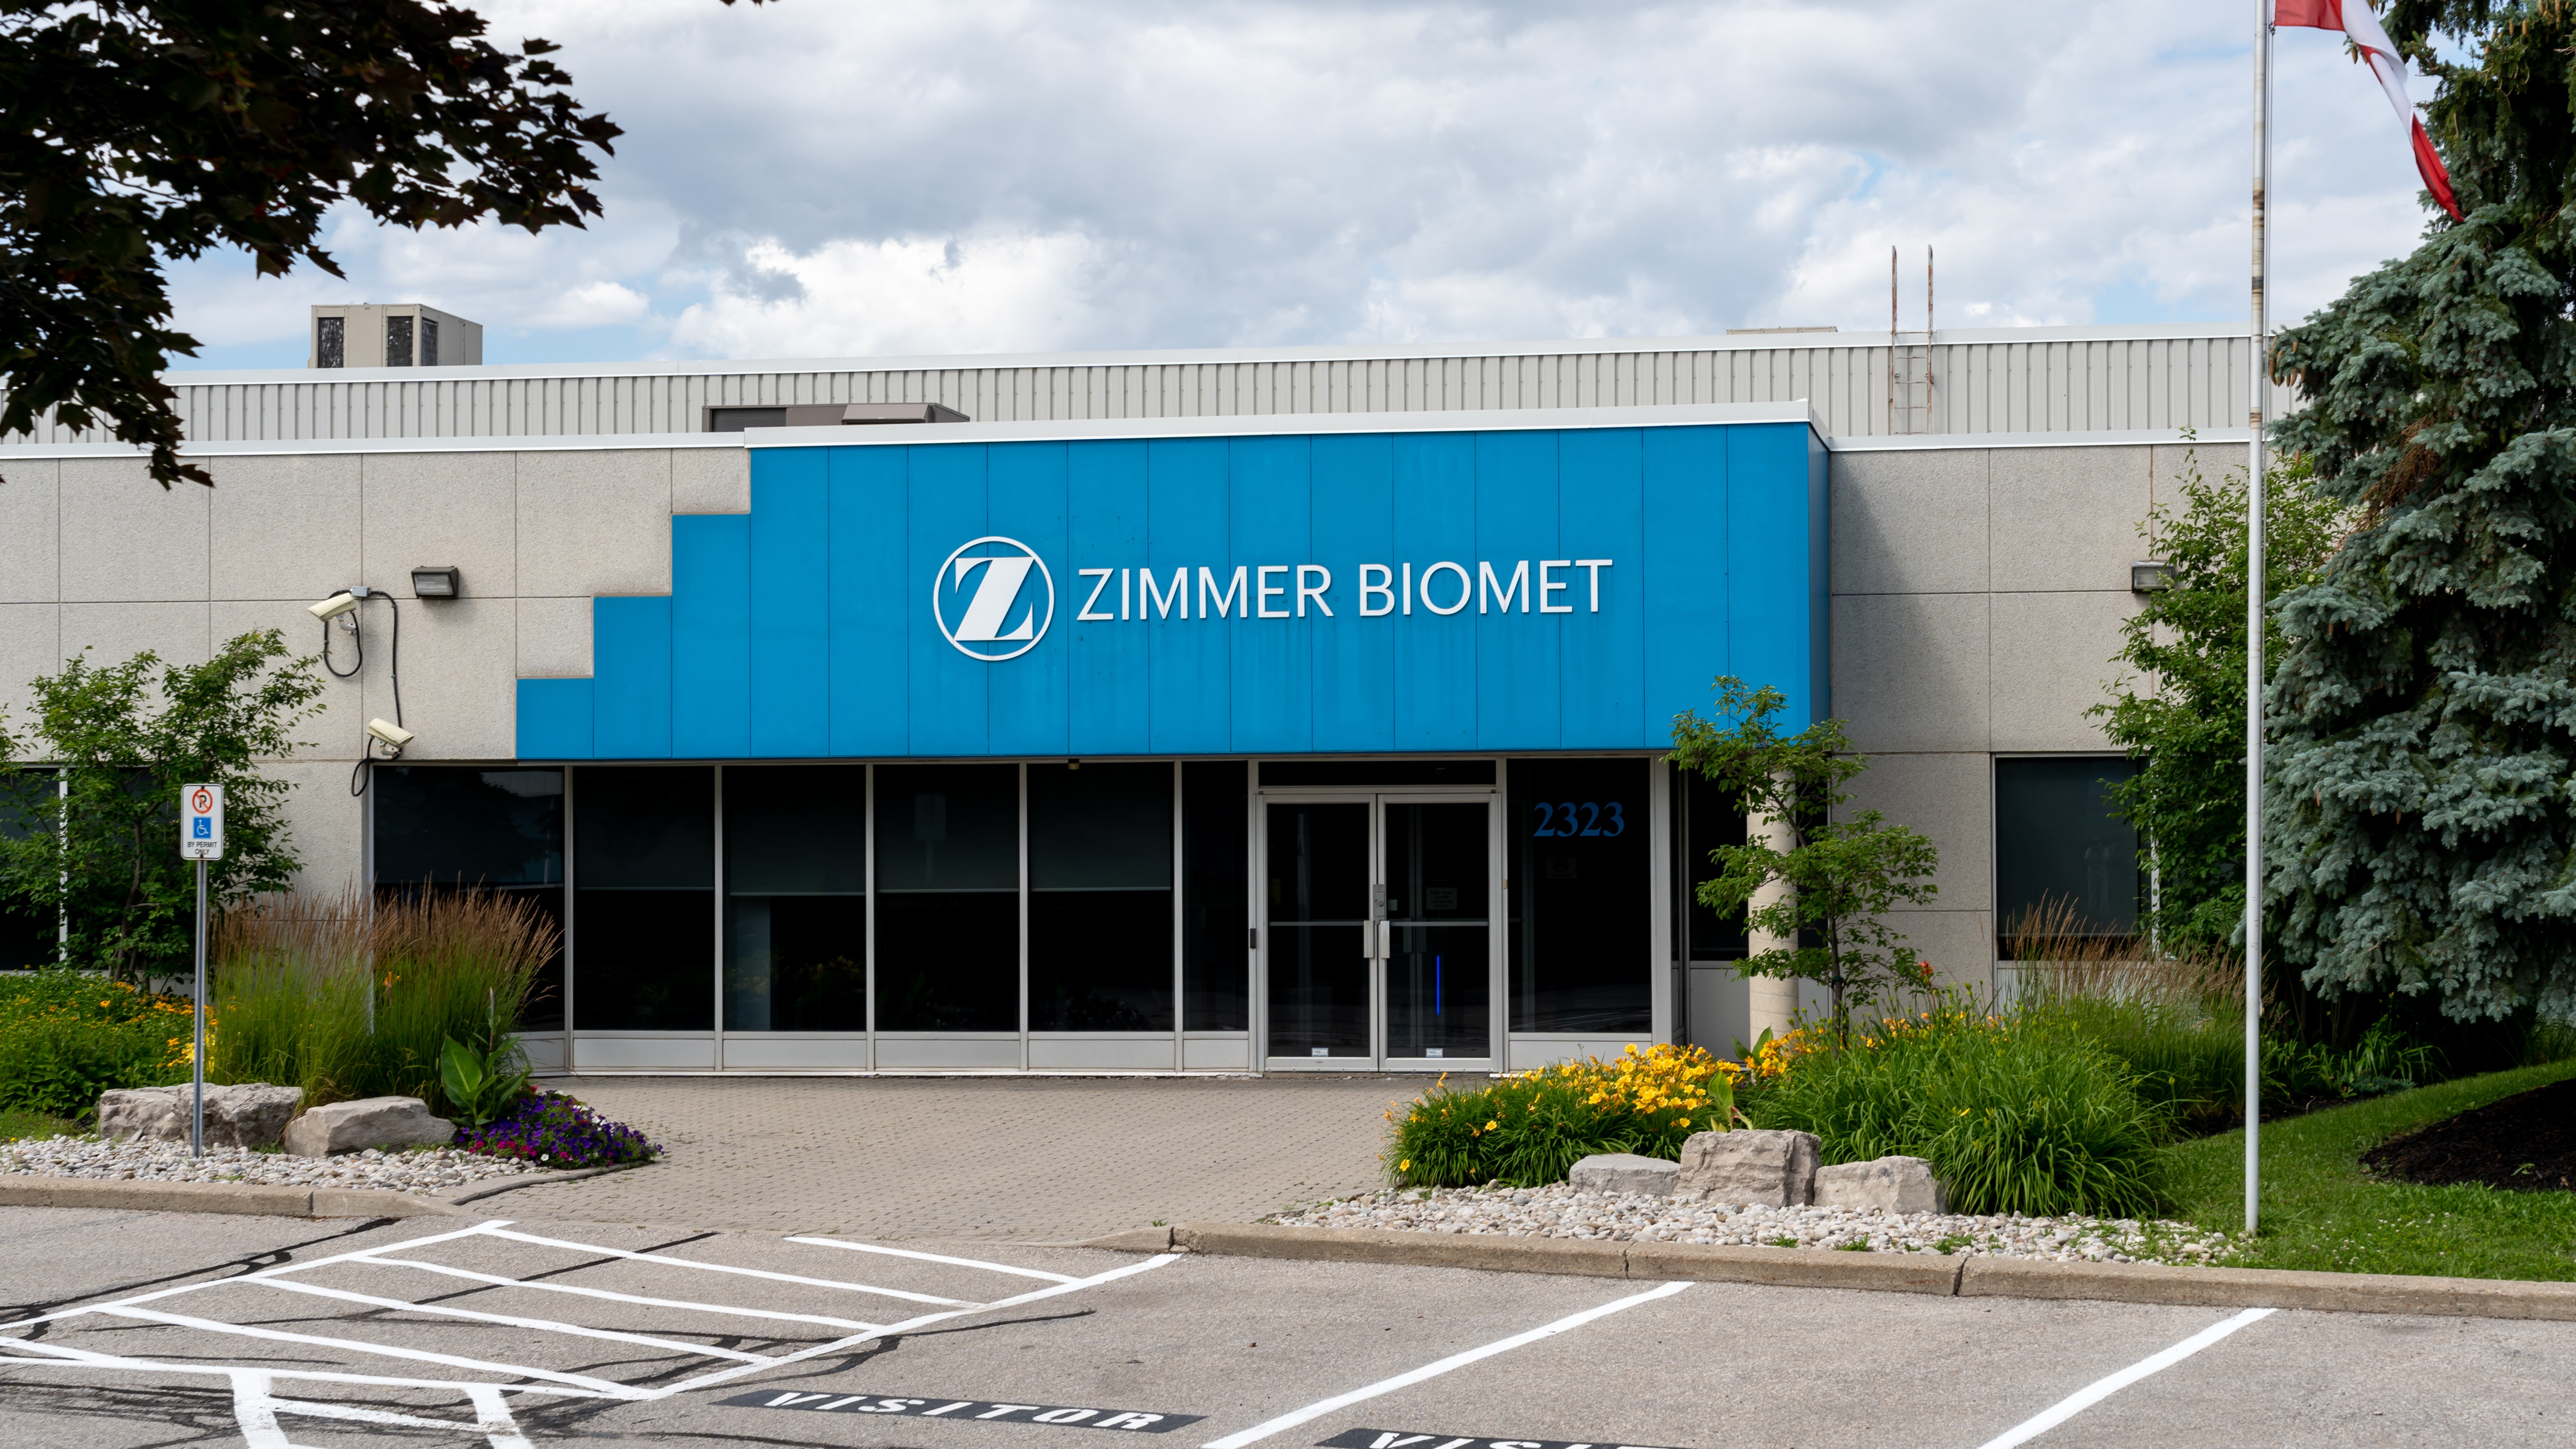 Zimmer Biomet: Slow Growing Market Leader (NYSE:ZBH) | Seeking Alpha